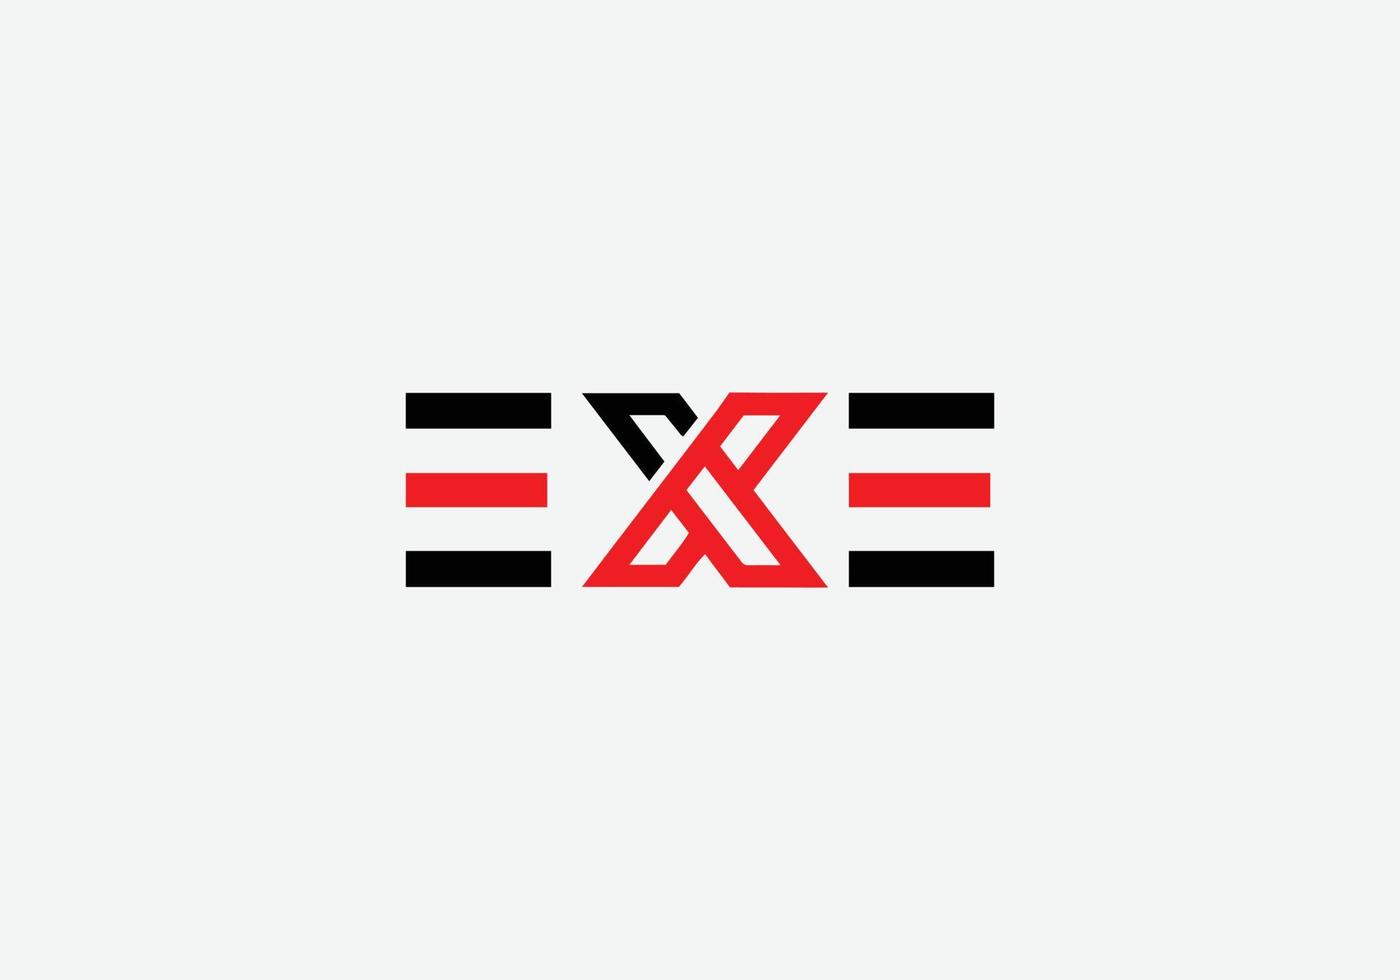 Abstract E X E letter marks minimalist logo design vector